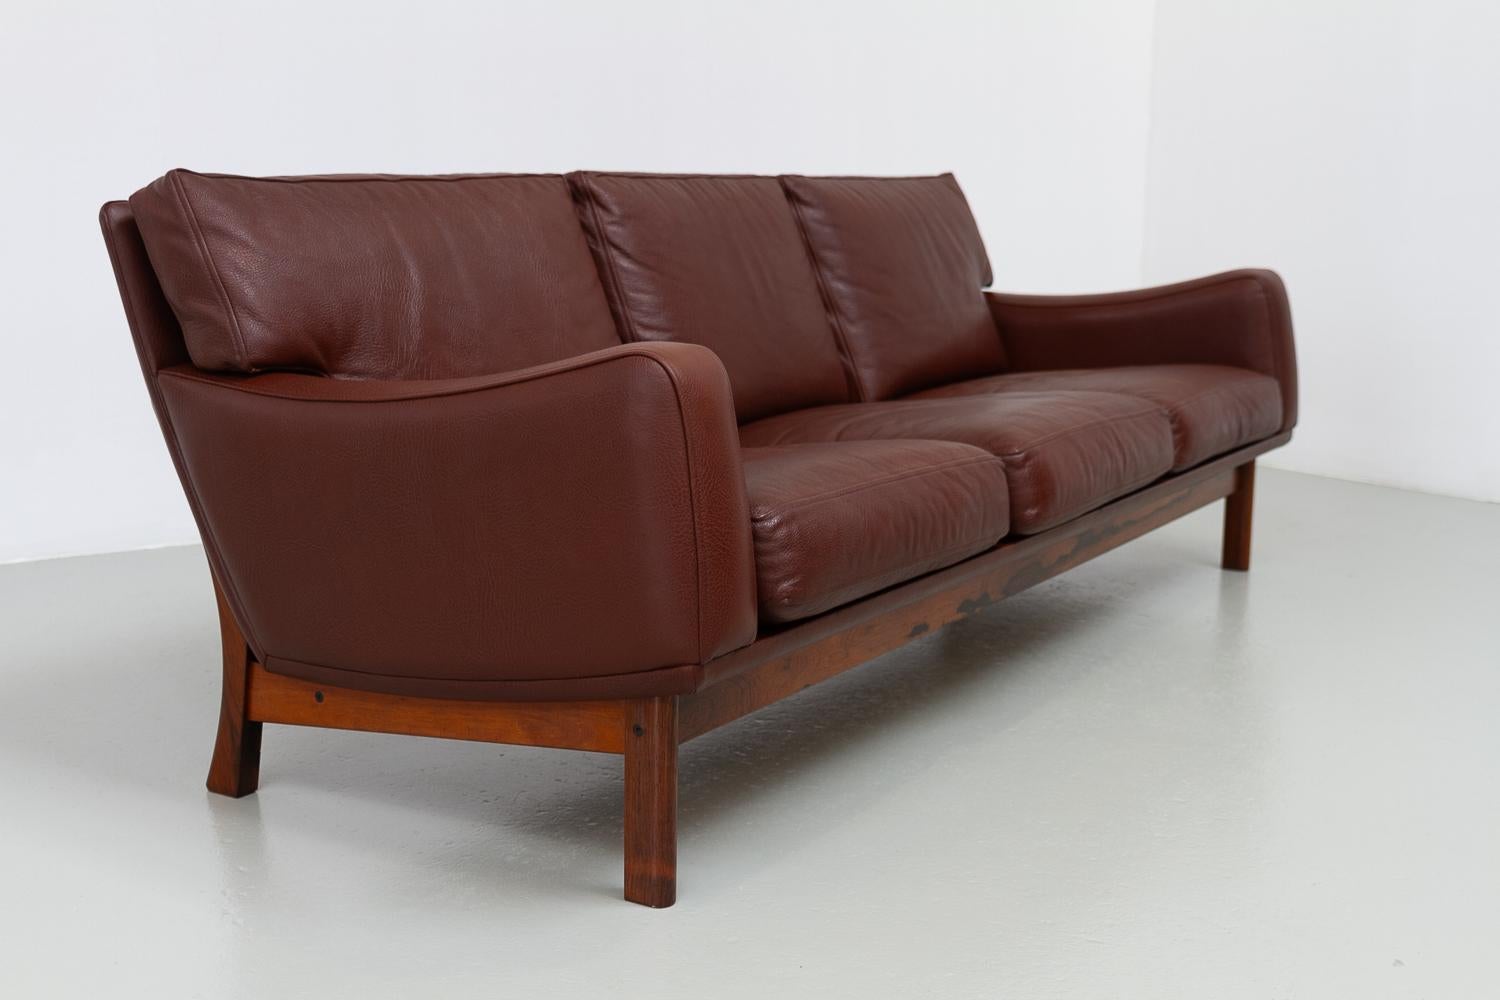 Scandinavian Modern Danish Modern Leather and Rosewood Sofa by Eran, 1960s. For Sale